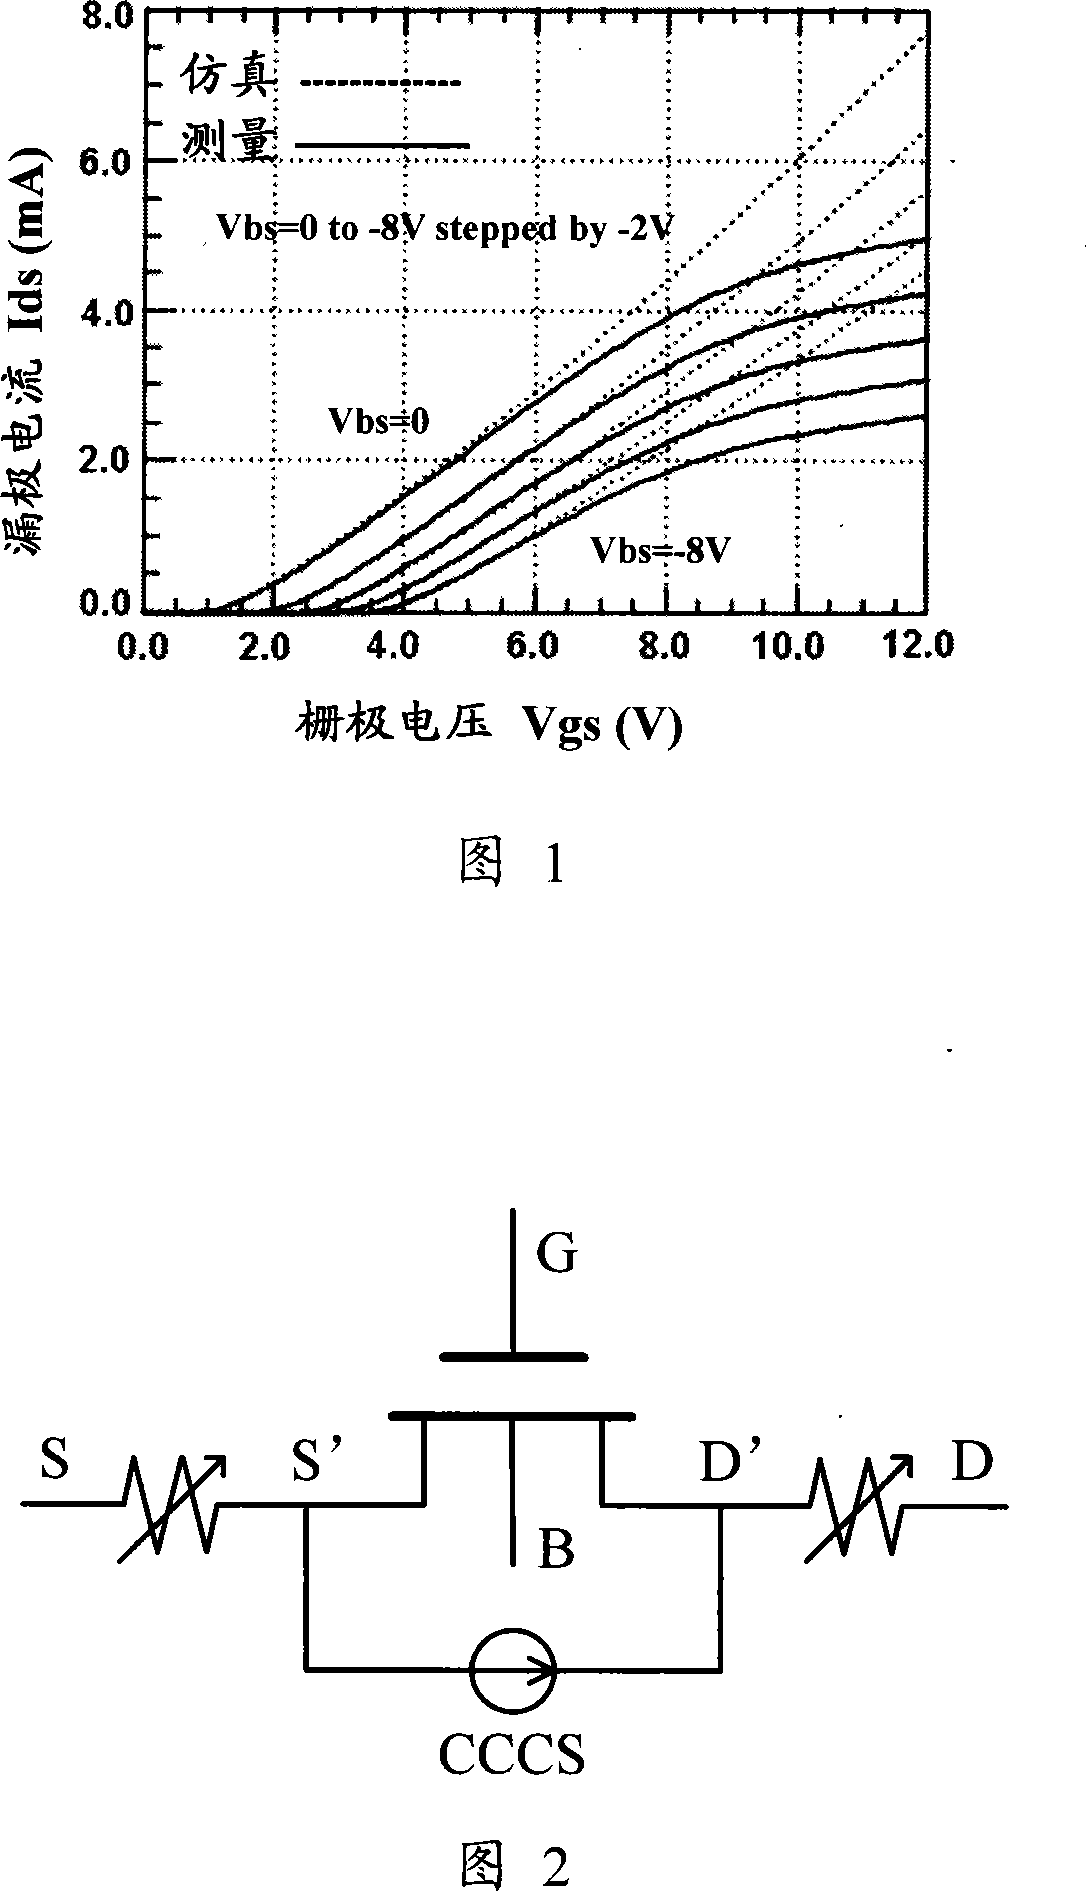 High voltage MOS transistor circuit simulated macro model